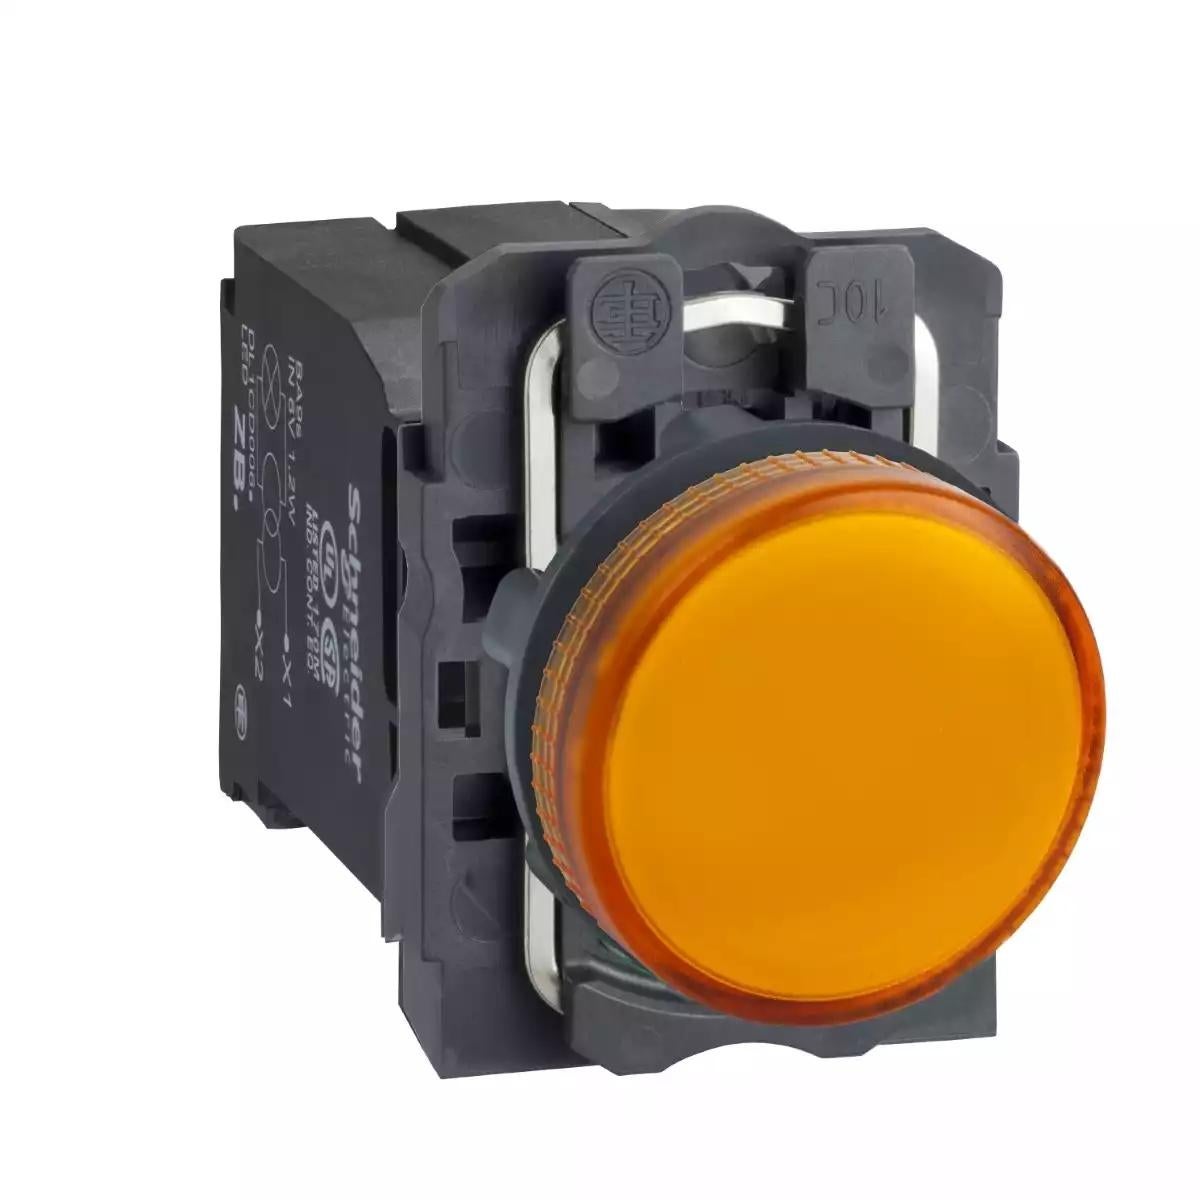 Pilot light, Harmony XB5, orange incandescent, plastic, 22mm, plain lens, BA9s bulb, 220...240V